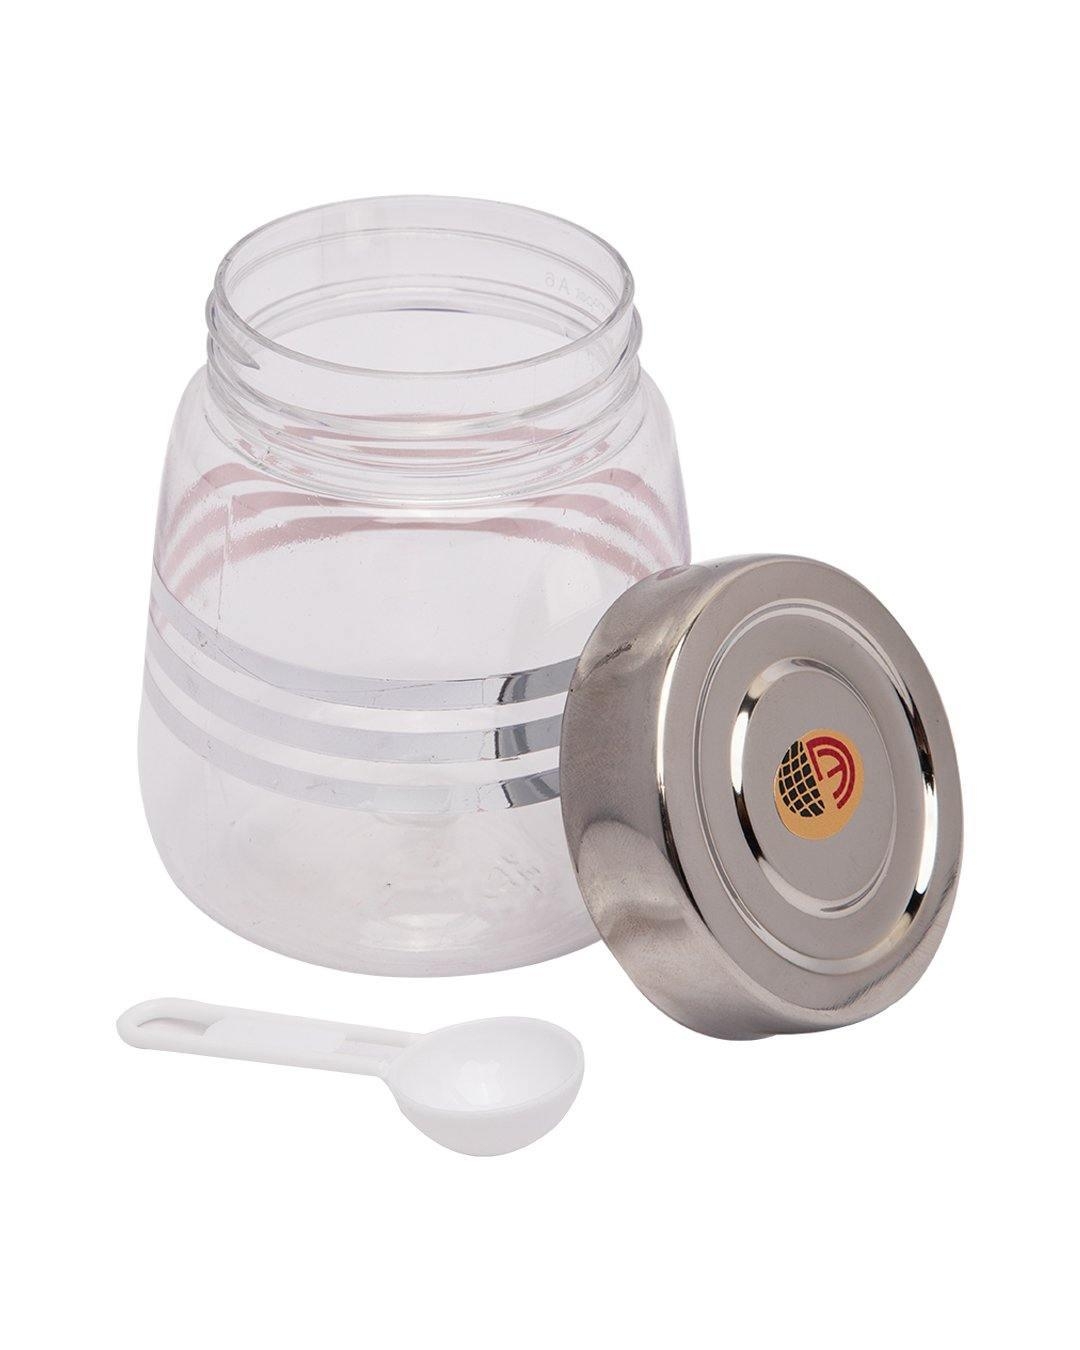 Market 99 | Jars, Transparent & Silver, Plastic, Set of 6, 200 mL 4